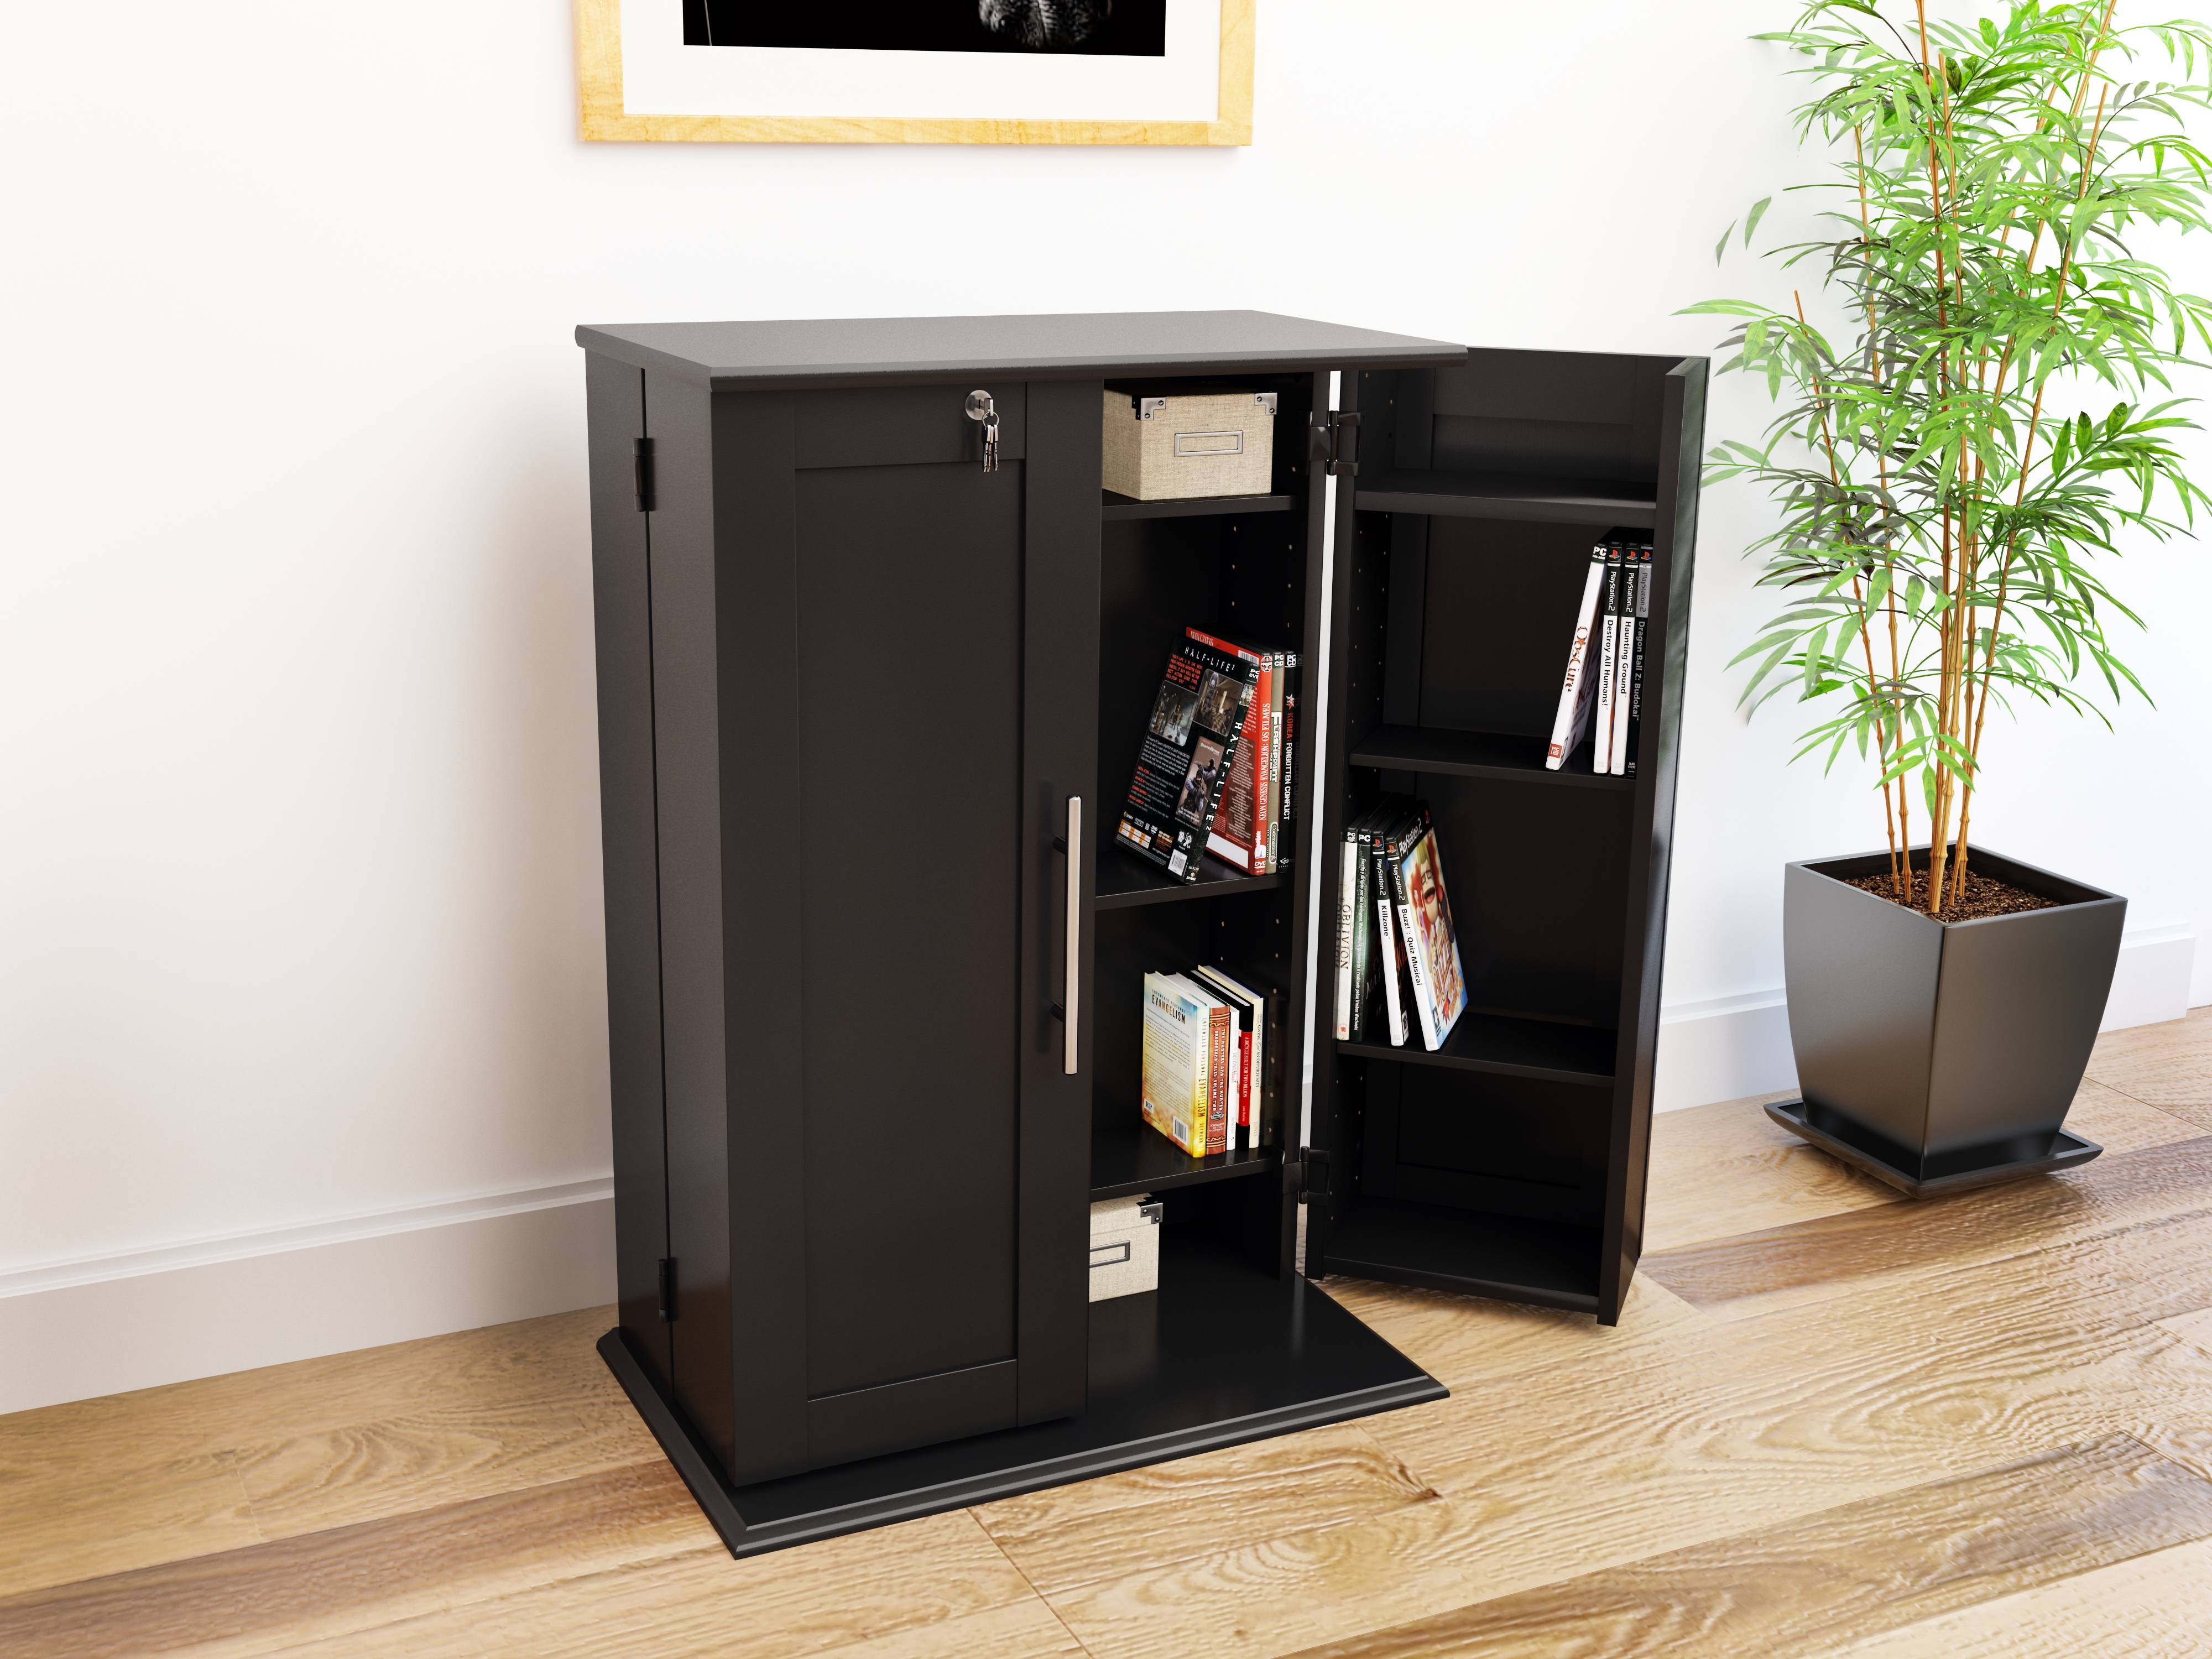 Prepac Locking Media Storage Cabinet with Shaker Doors, Black - image 1 of 6